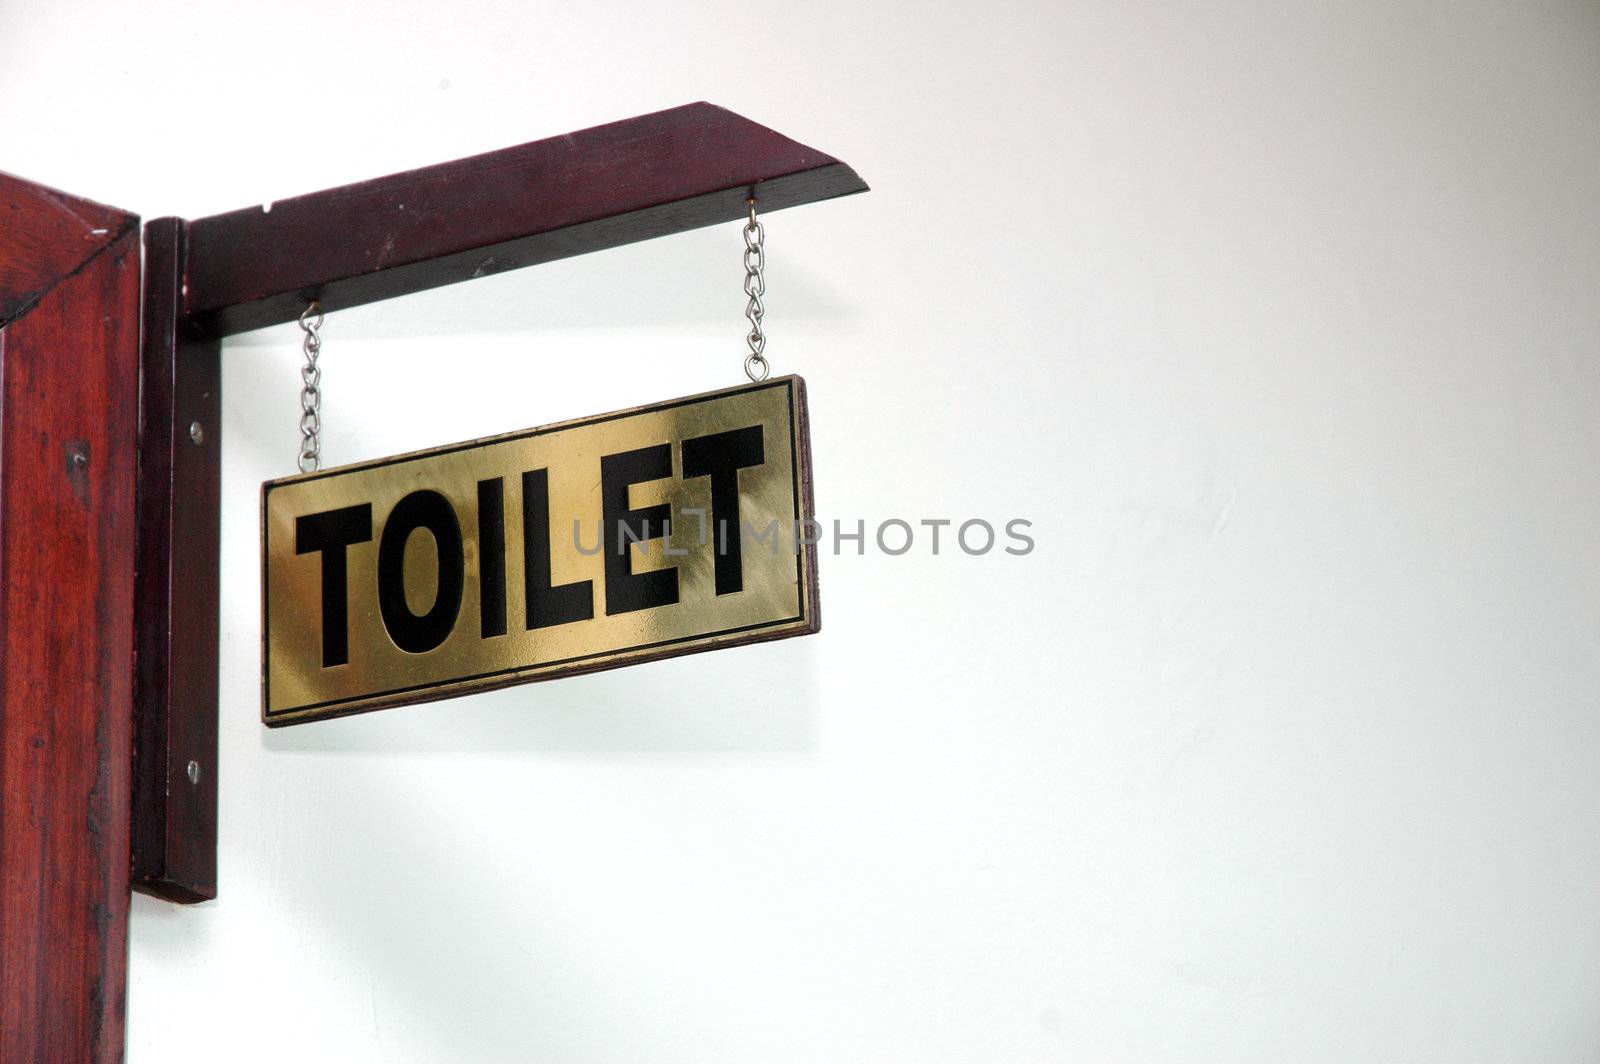 toilet sign